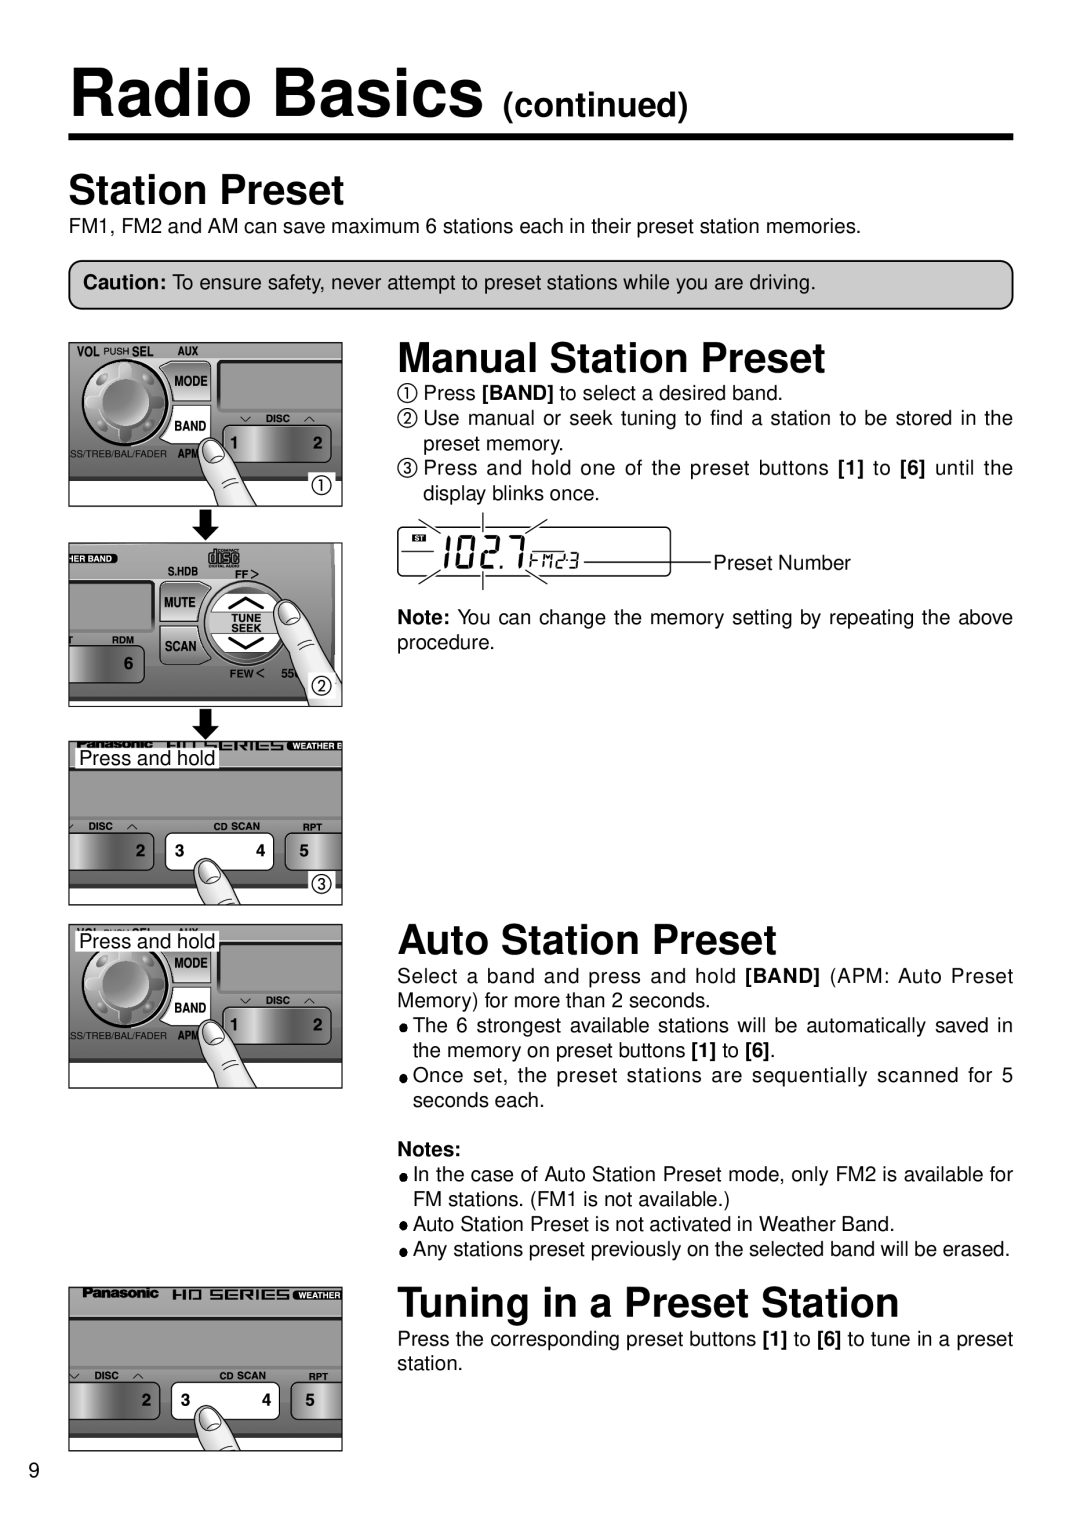 Panasonic CQ-5500U Radio Basics continued, Manual Station Preset, Auto Station Preset, Tuning in a Preset Station 